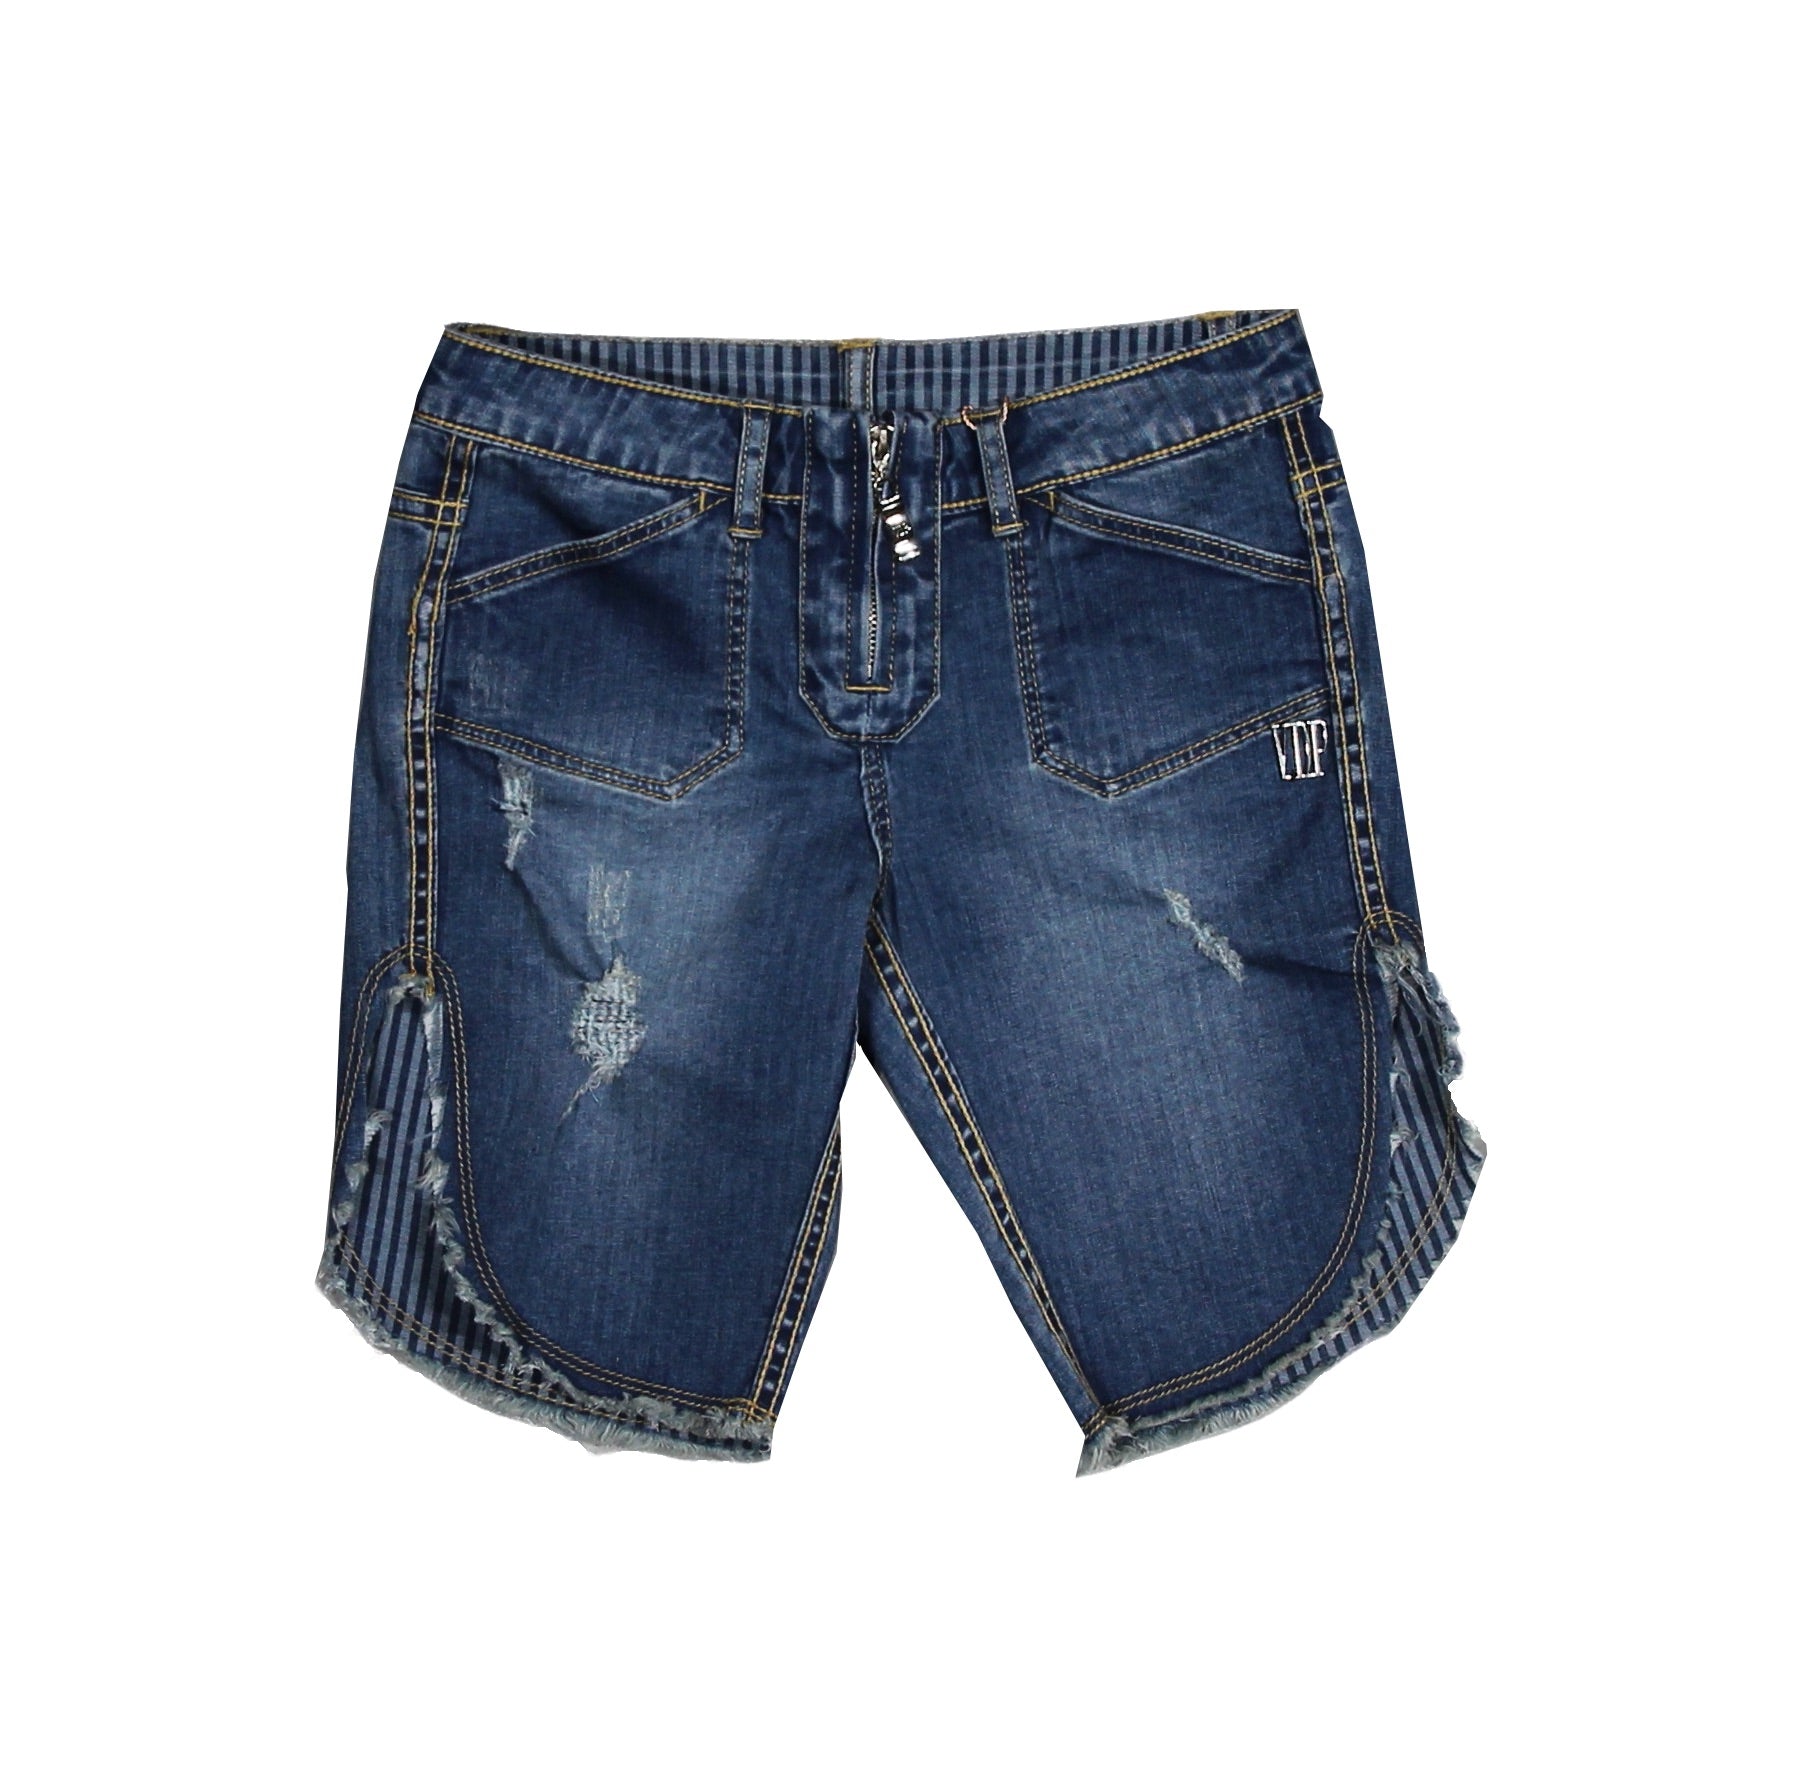 Reversible denim shorts from the Via Delle Perle Girls' Clothing Line, regular five-pocket model....